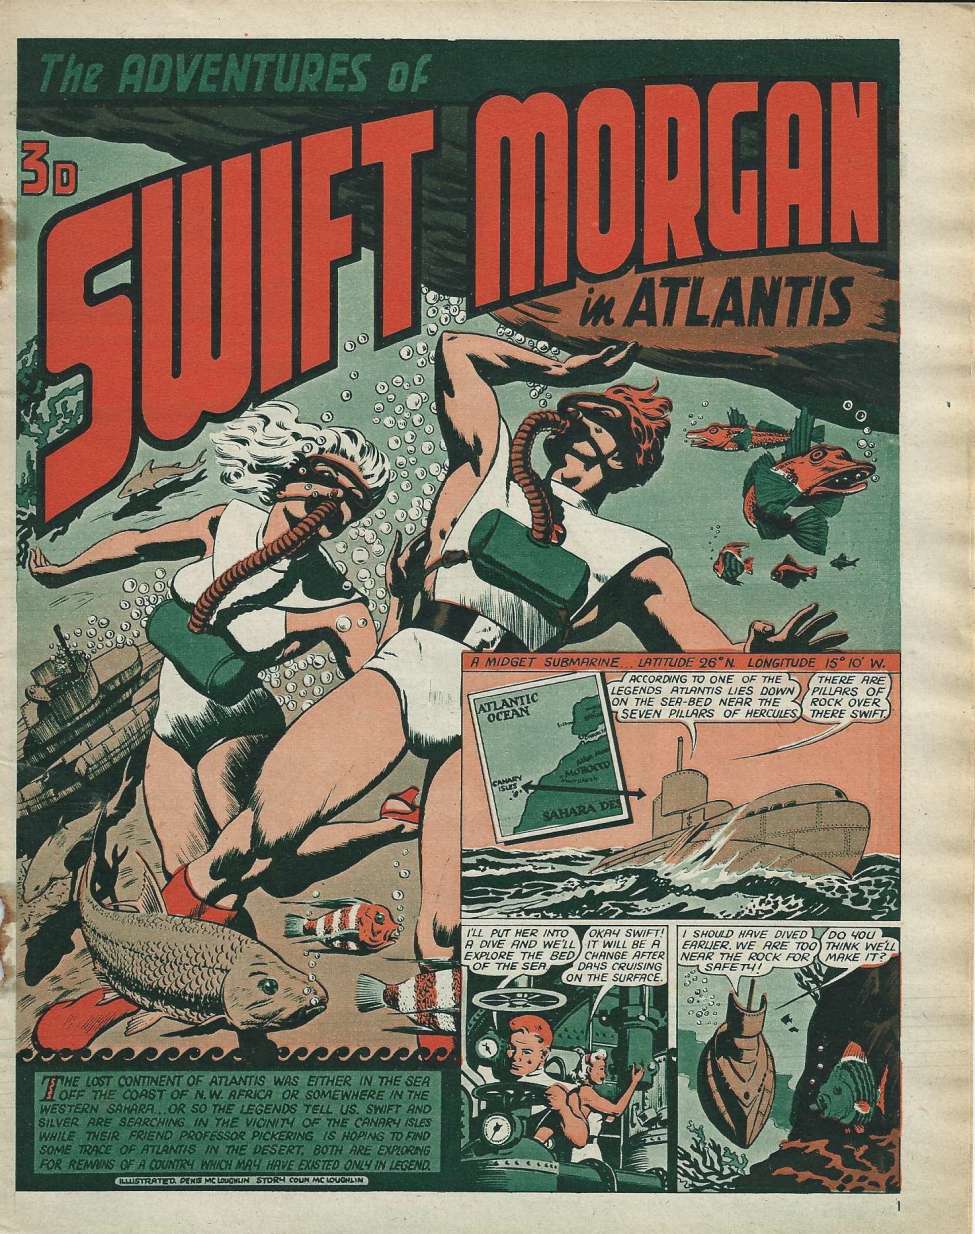 Comic Book Cover For Swift Morgan 16 (in Atlantis)